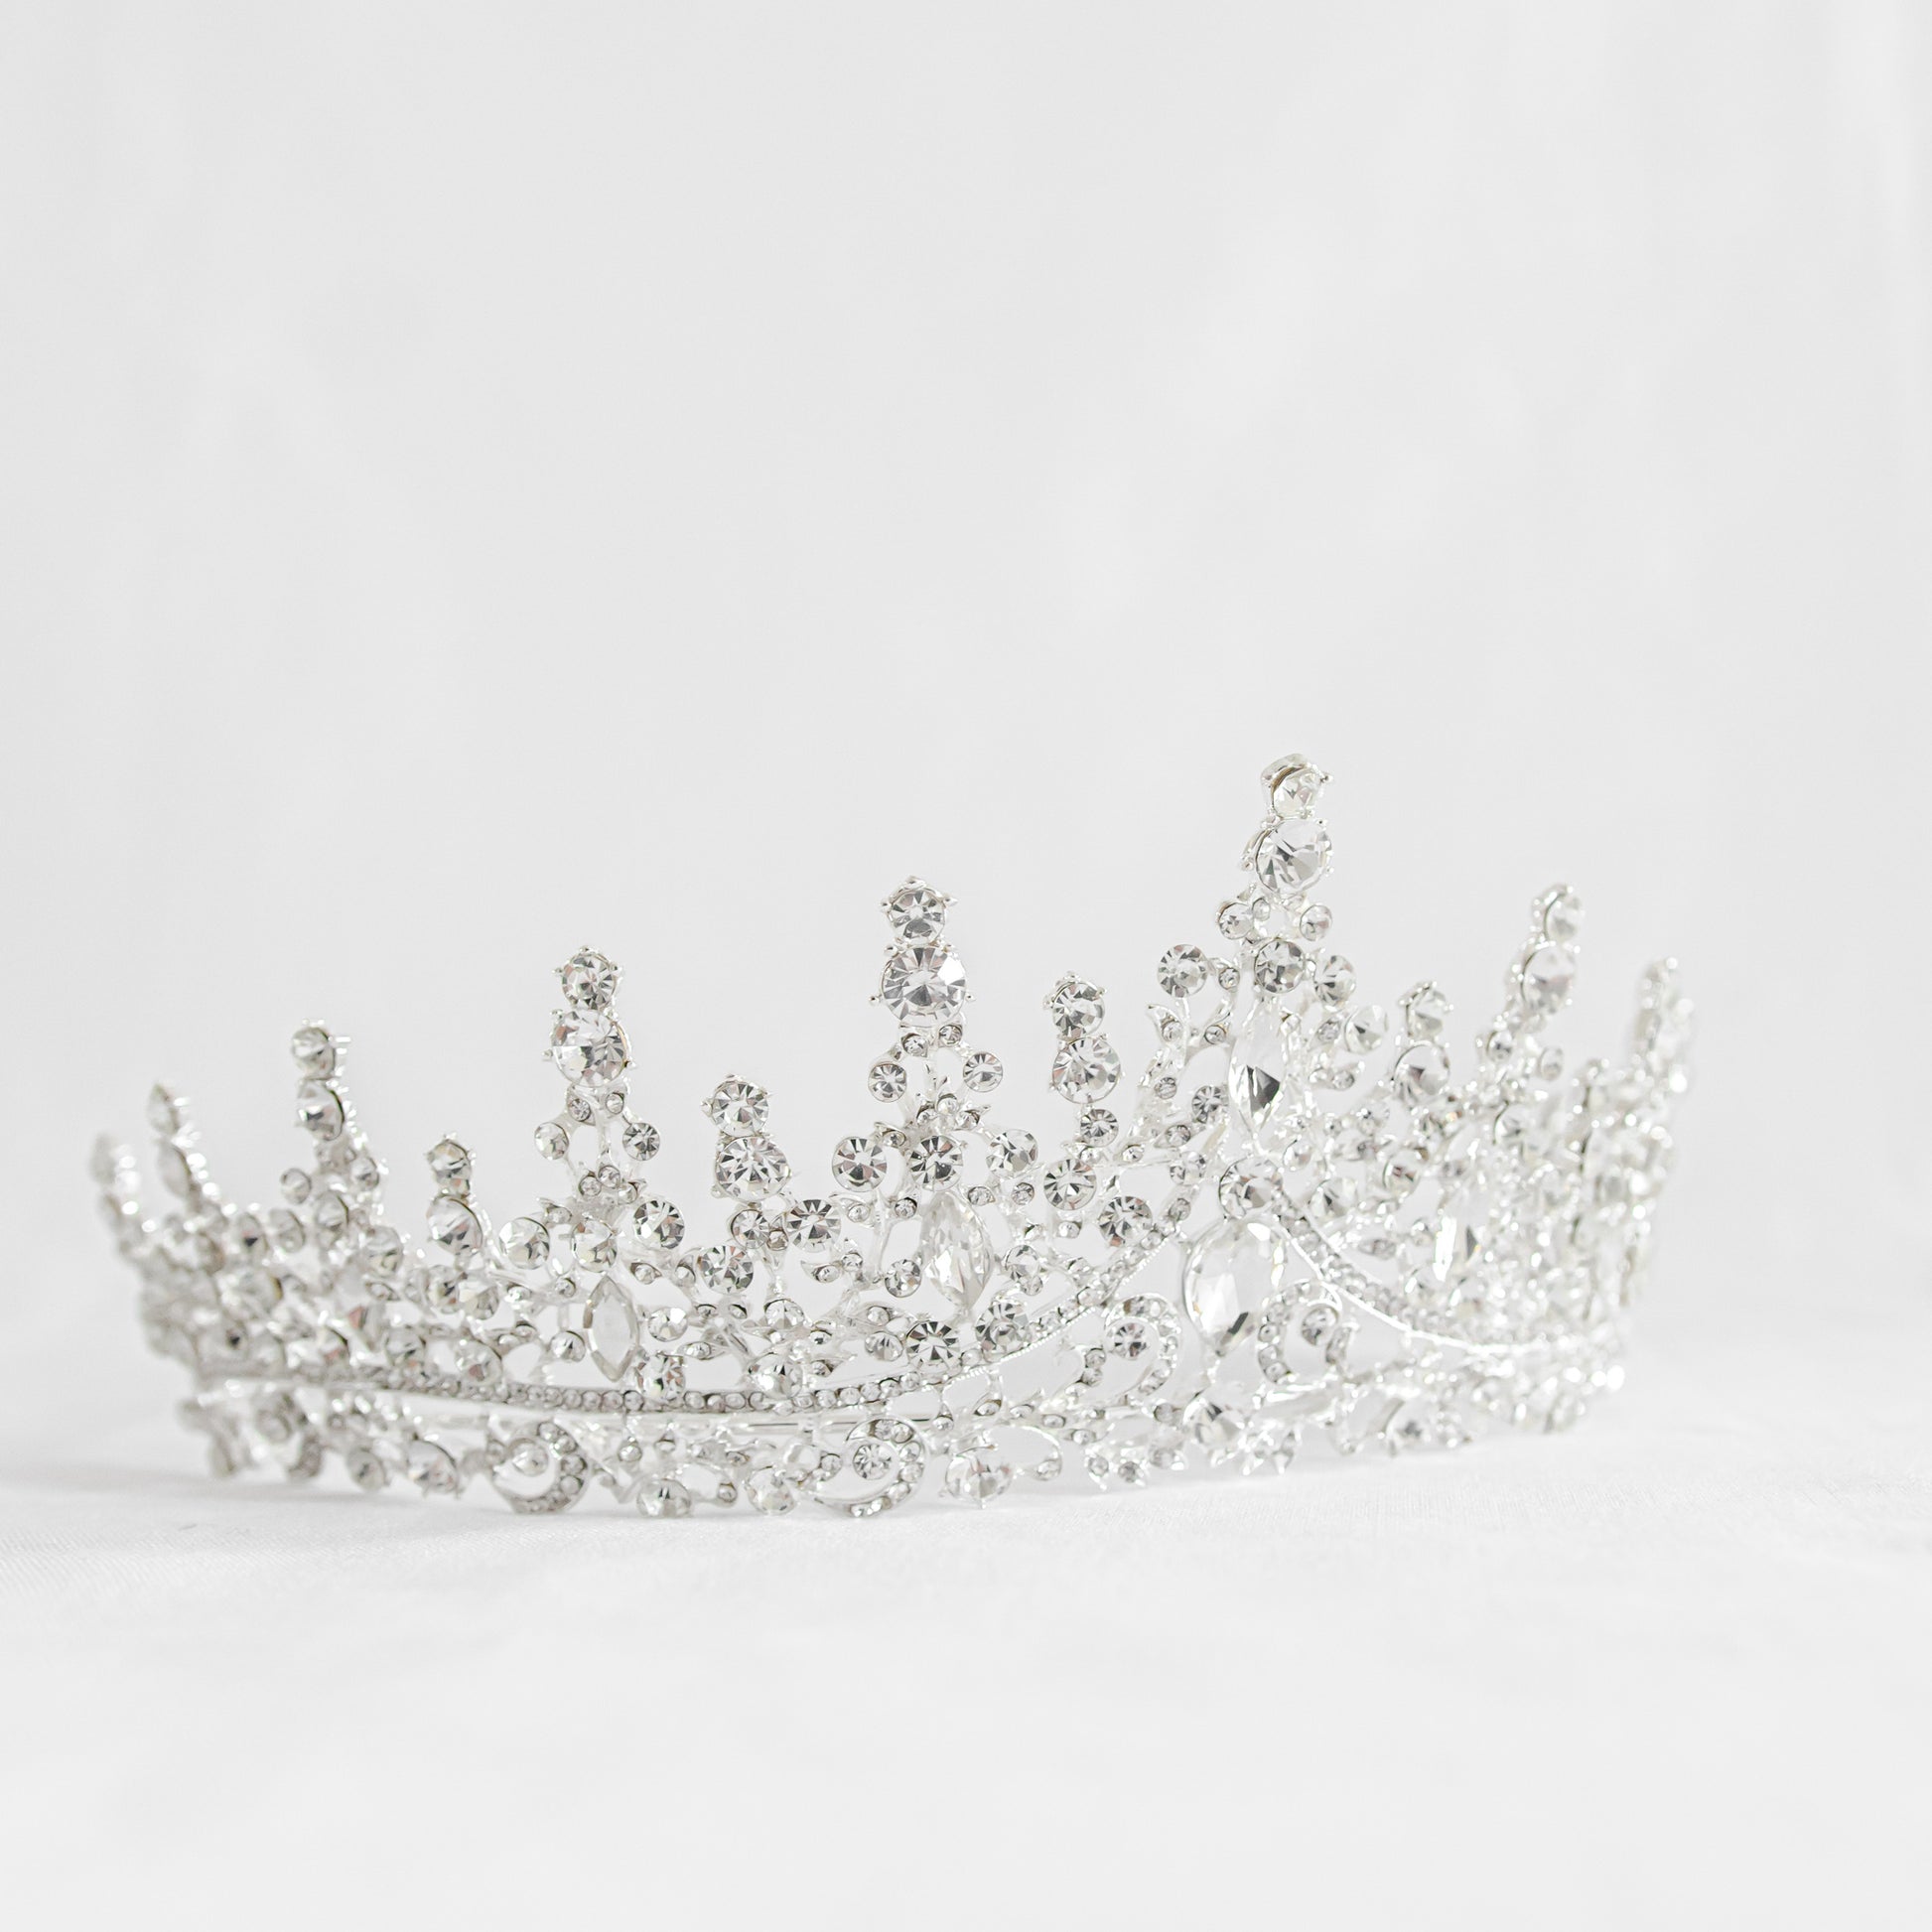 A closer look of Hazel bridal tiara with sparkling crystals